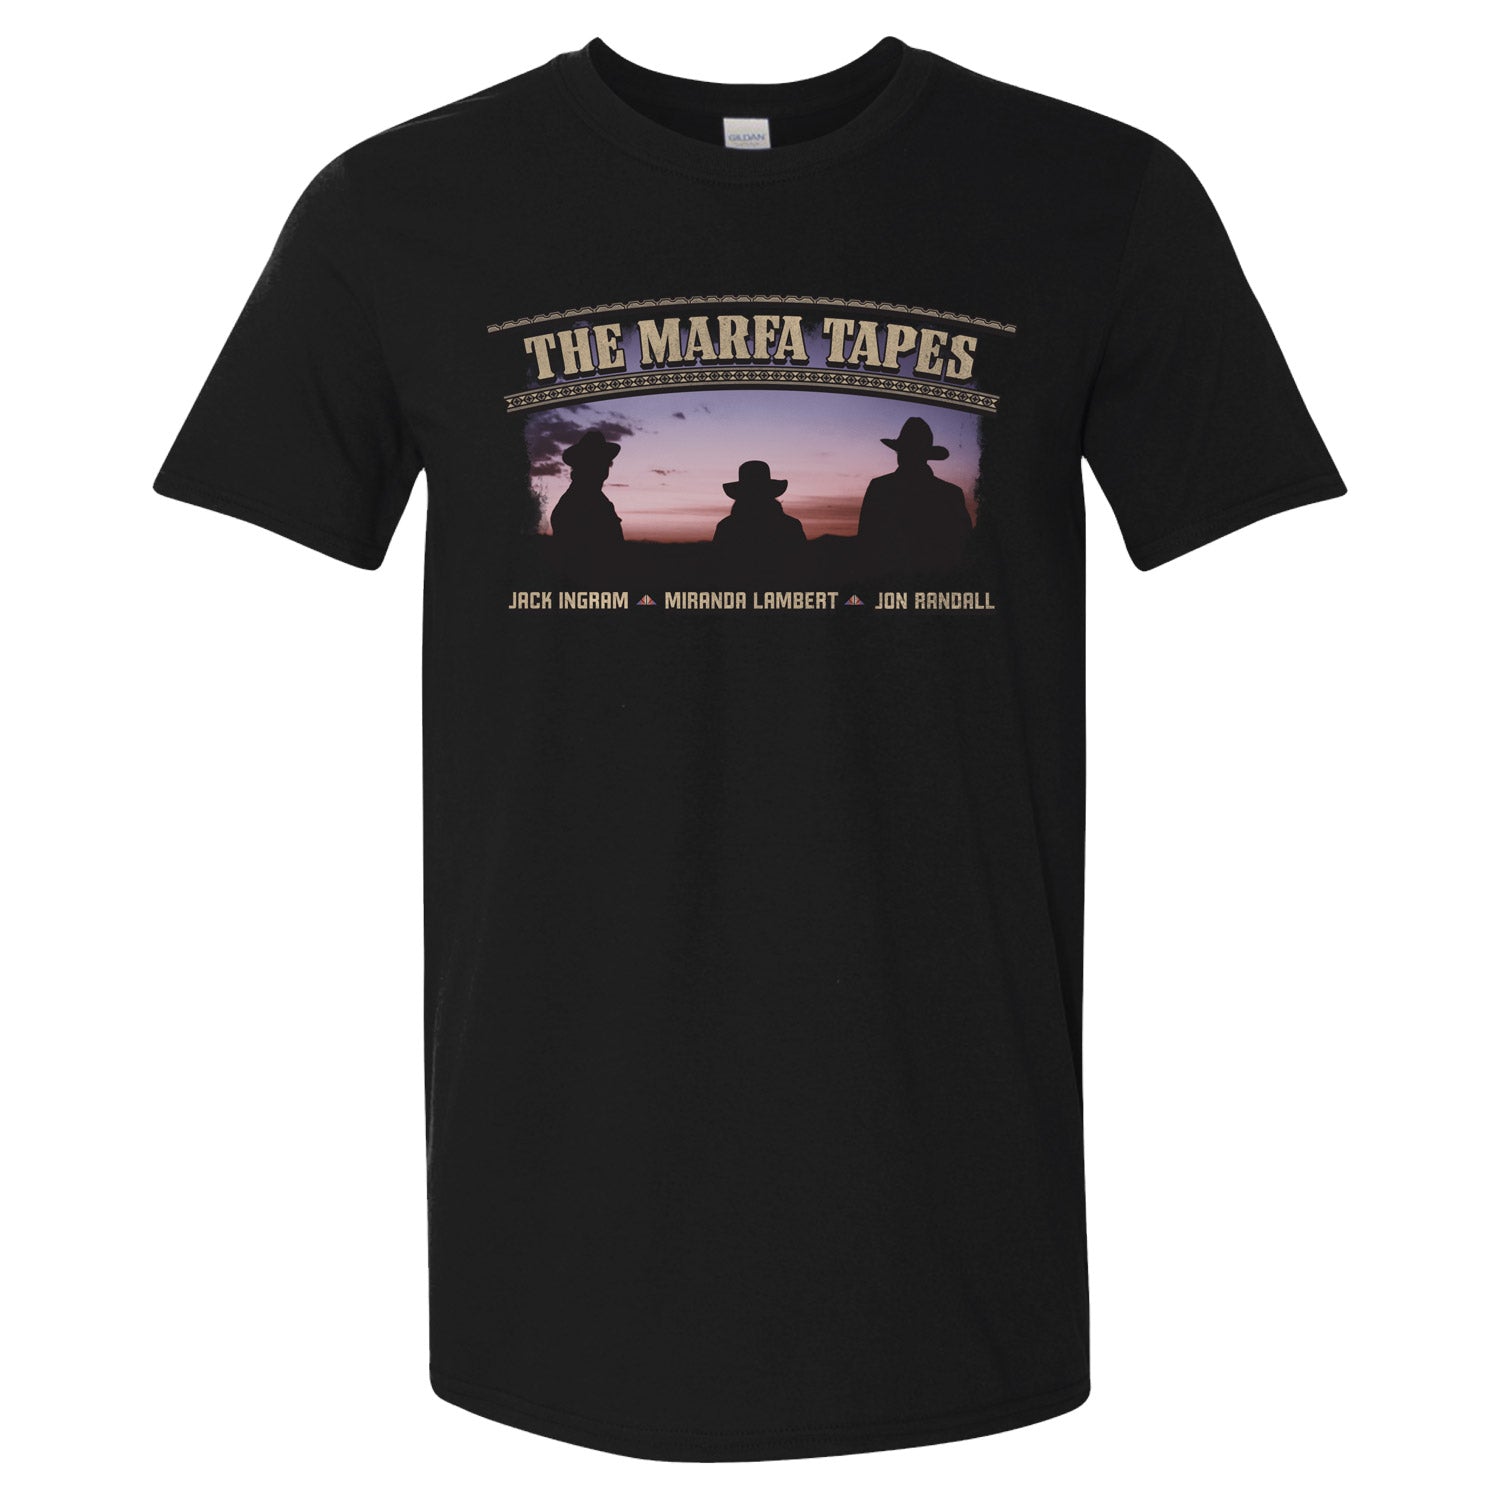 T-shirt front with "The Marfa Tapes" and image of Jack Ingram, Miranda Lambert, and Jon Randall.